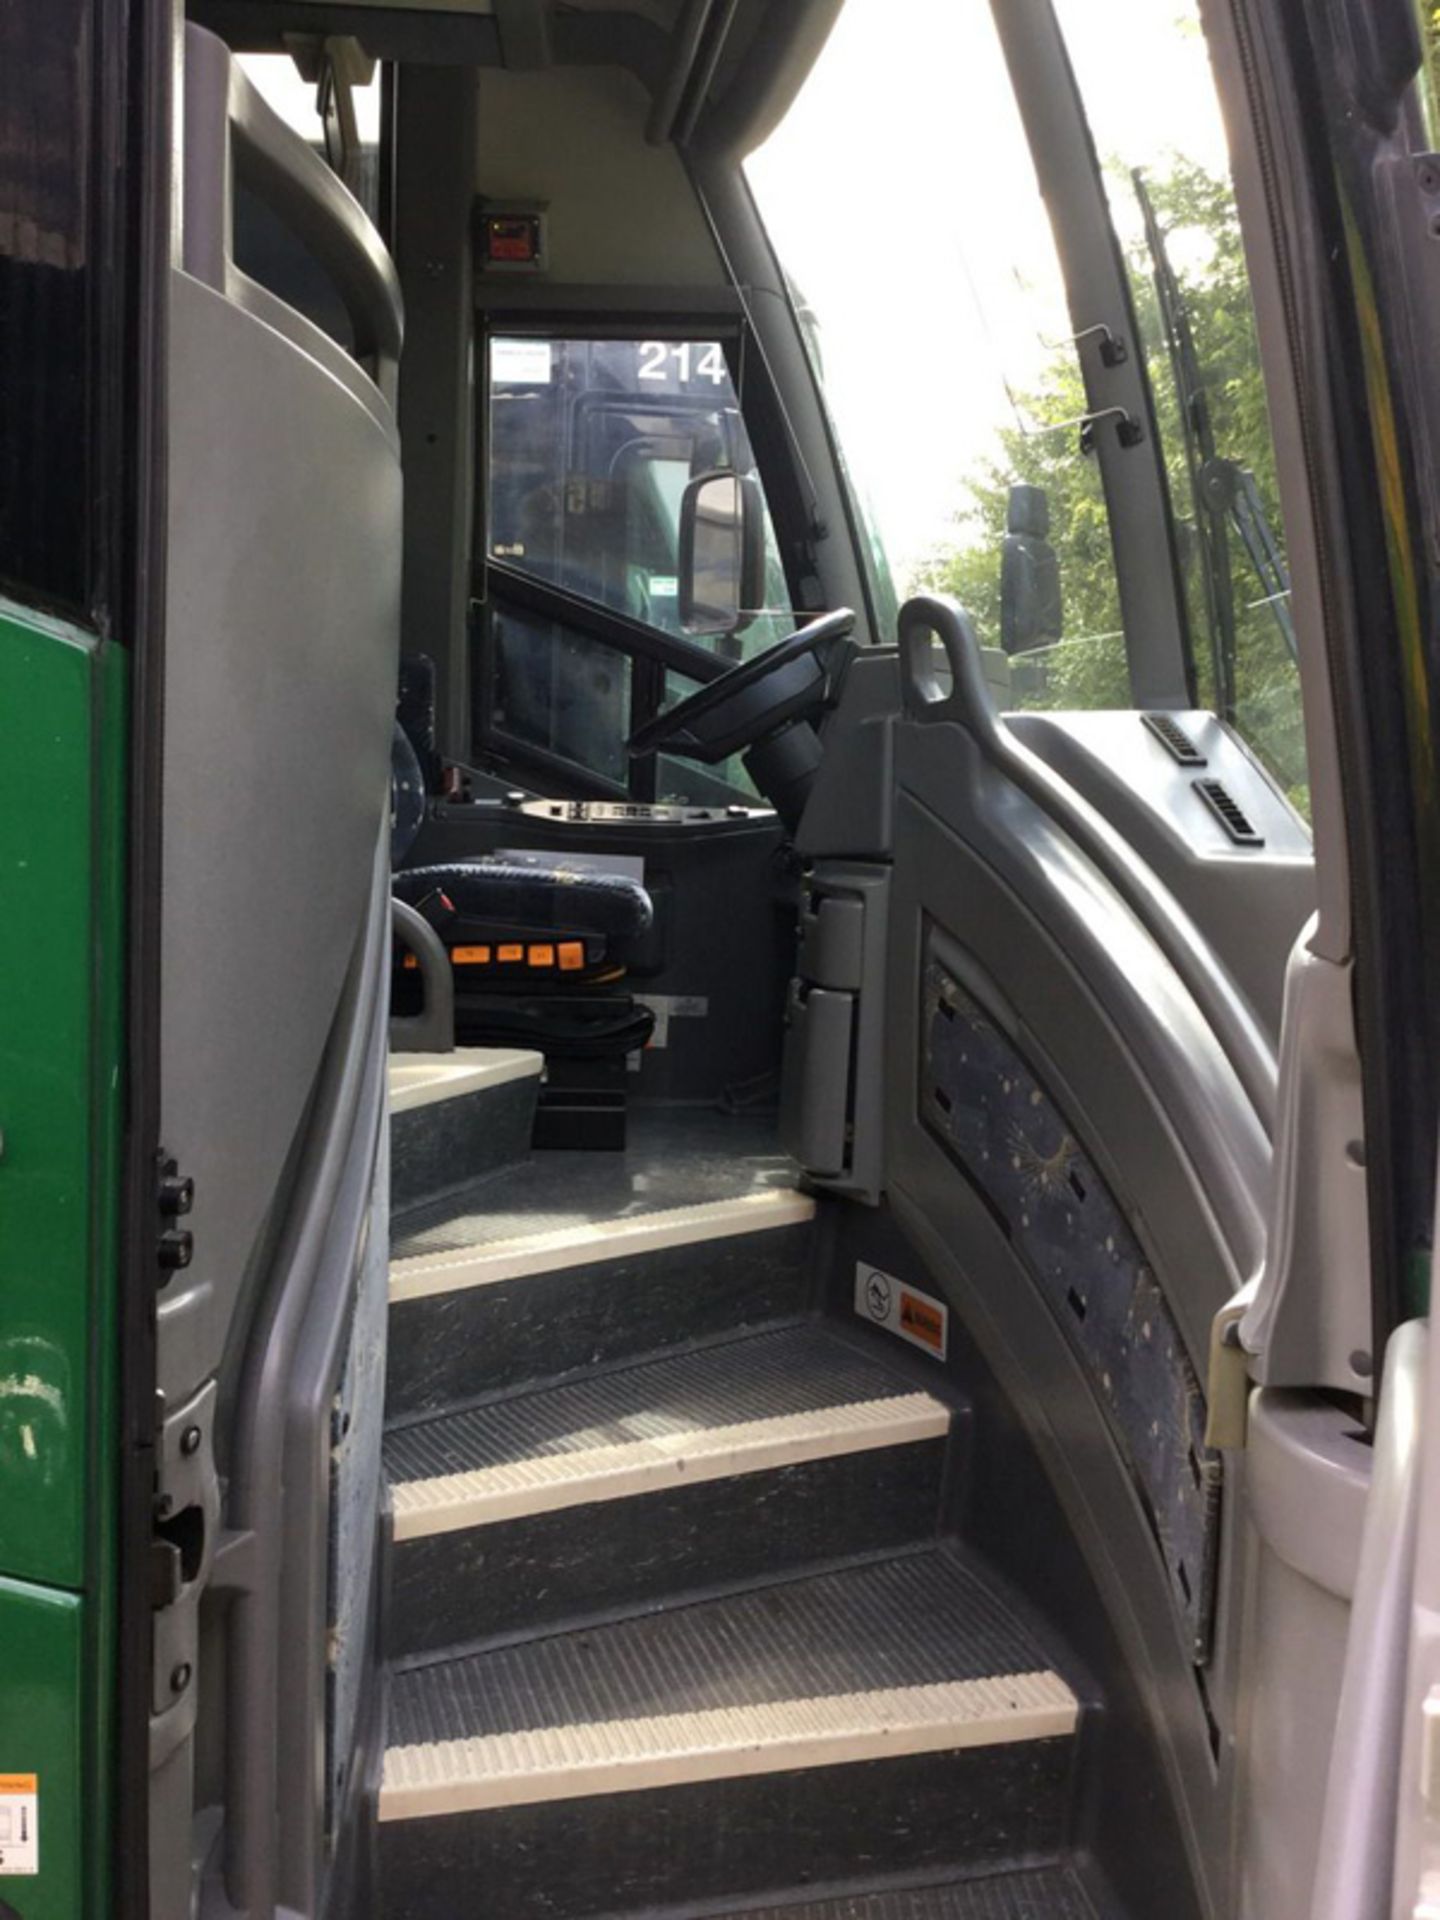 2011 MCI J4500 56-Passenger Charter Bus - Dual Axle, VIN 2MG3JMEA7BW065737, 499,340 Miles (Bus - Bild 6 aus 9